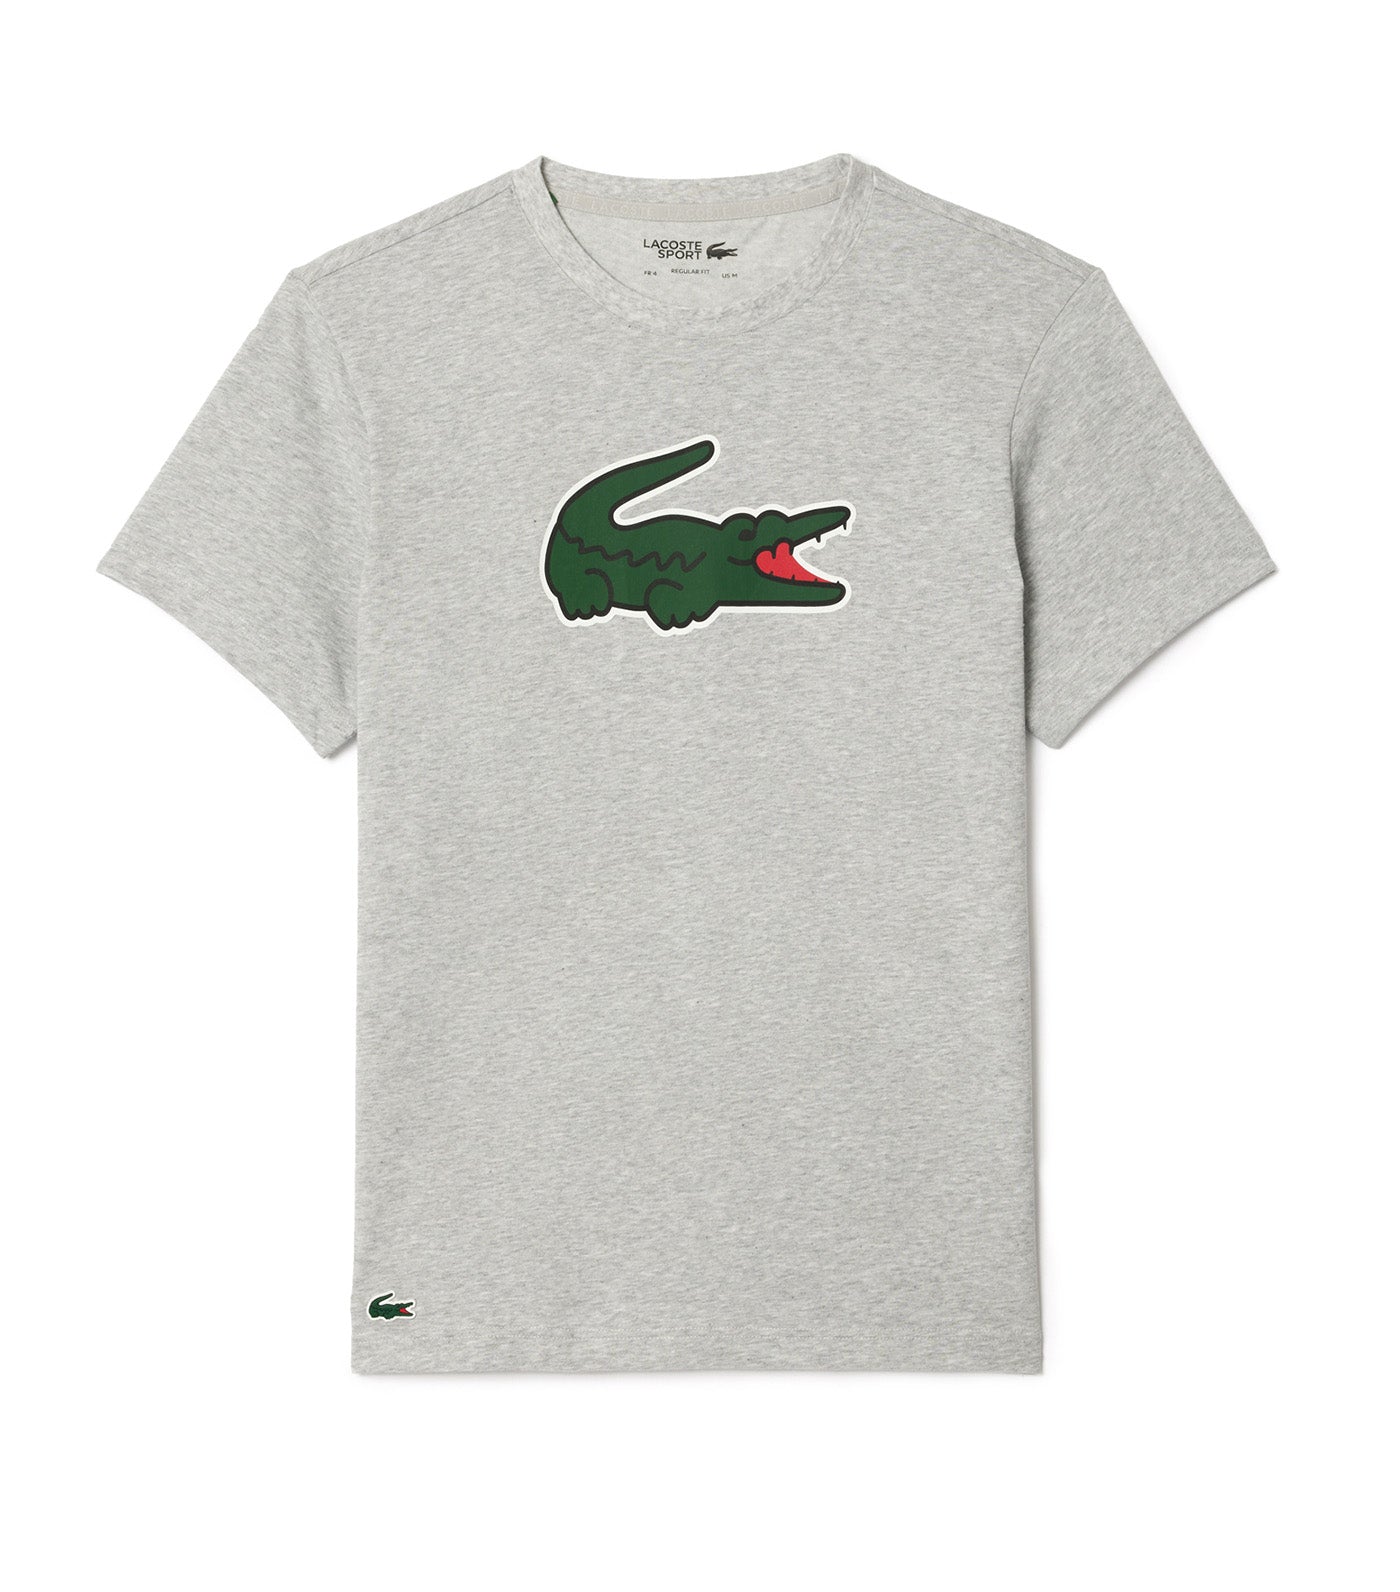 Sport Ultra-Dry Croc Print T-Shirt Silver Chine/Green-White